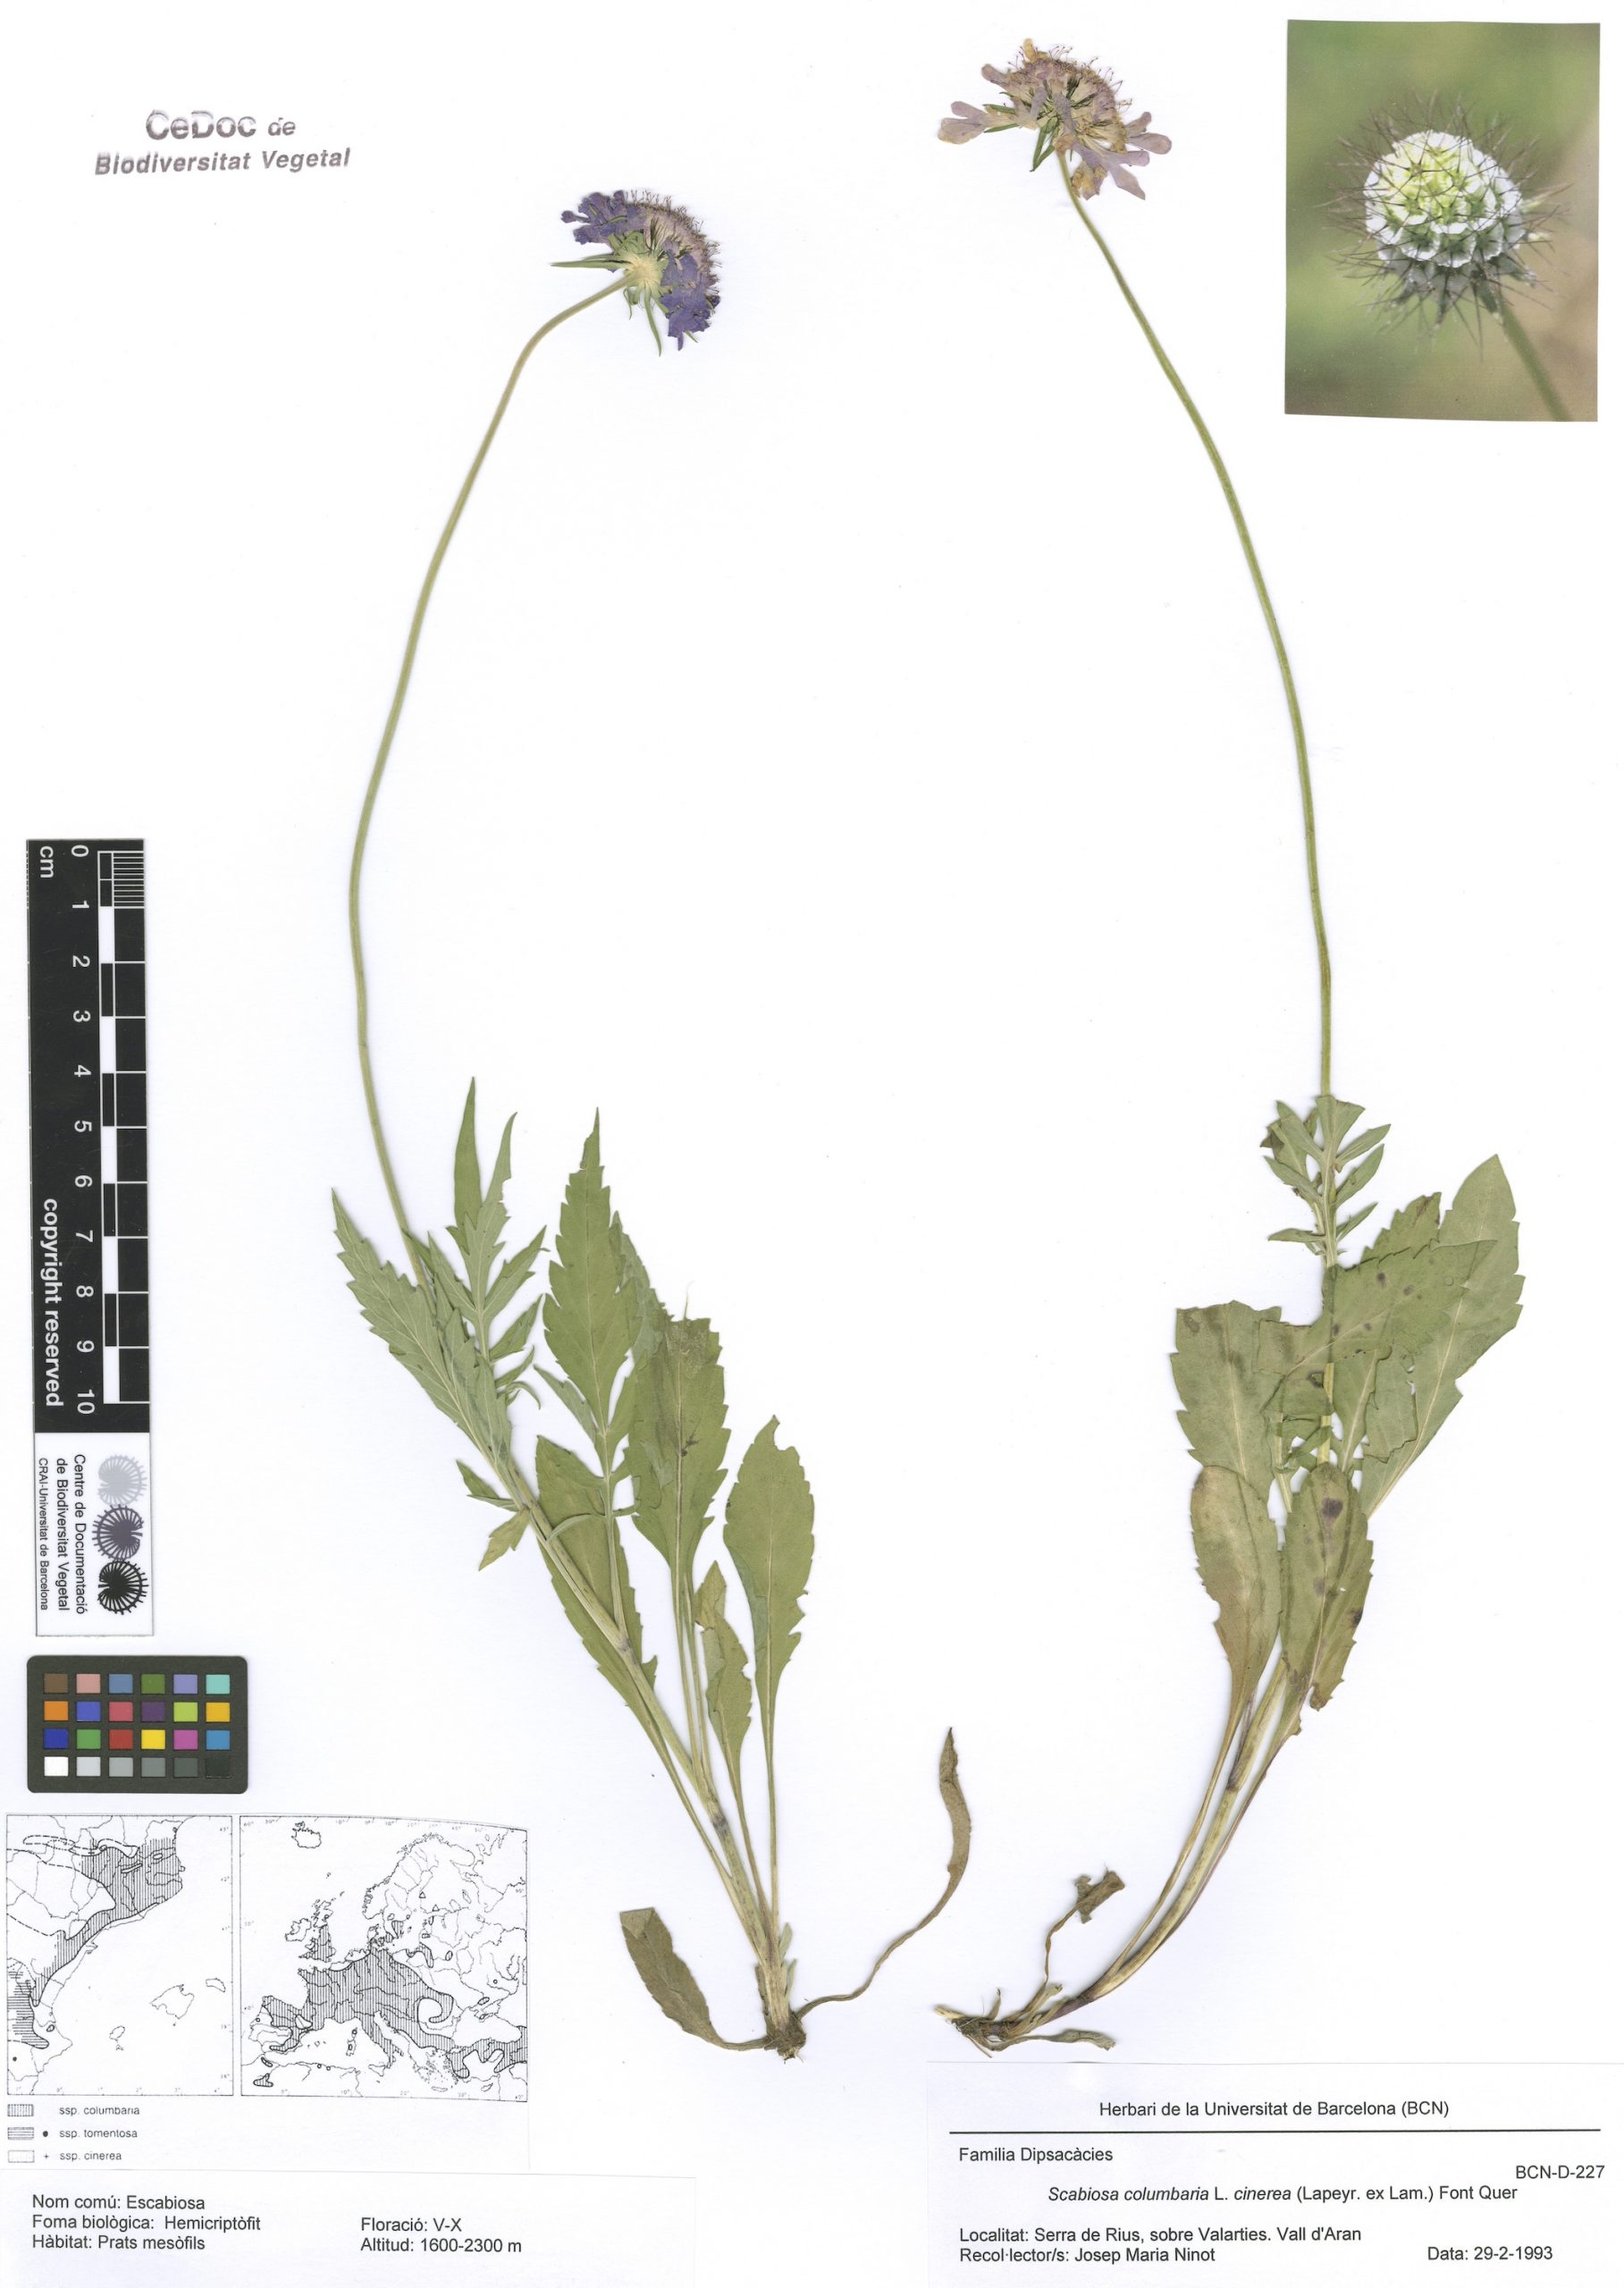 Scabiosa columbaria L. subsp. cinerea (Lapeyr. ex Lam.) Font Quer (Escabiosa)